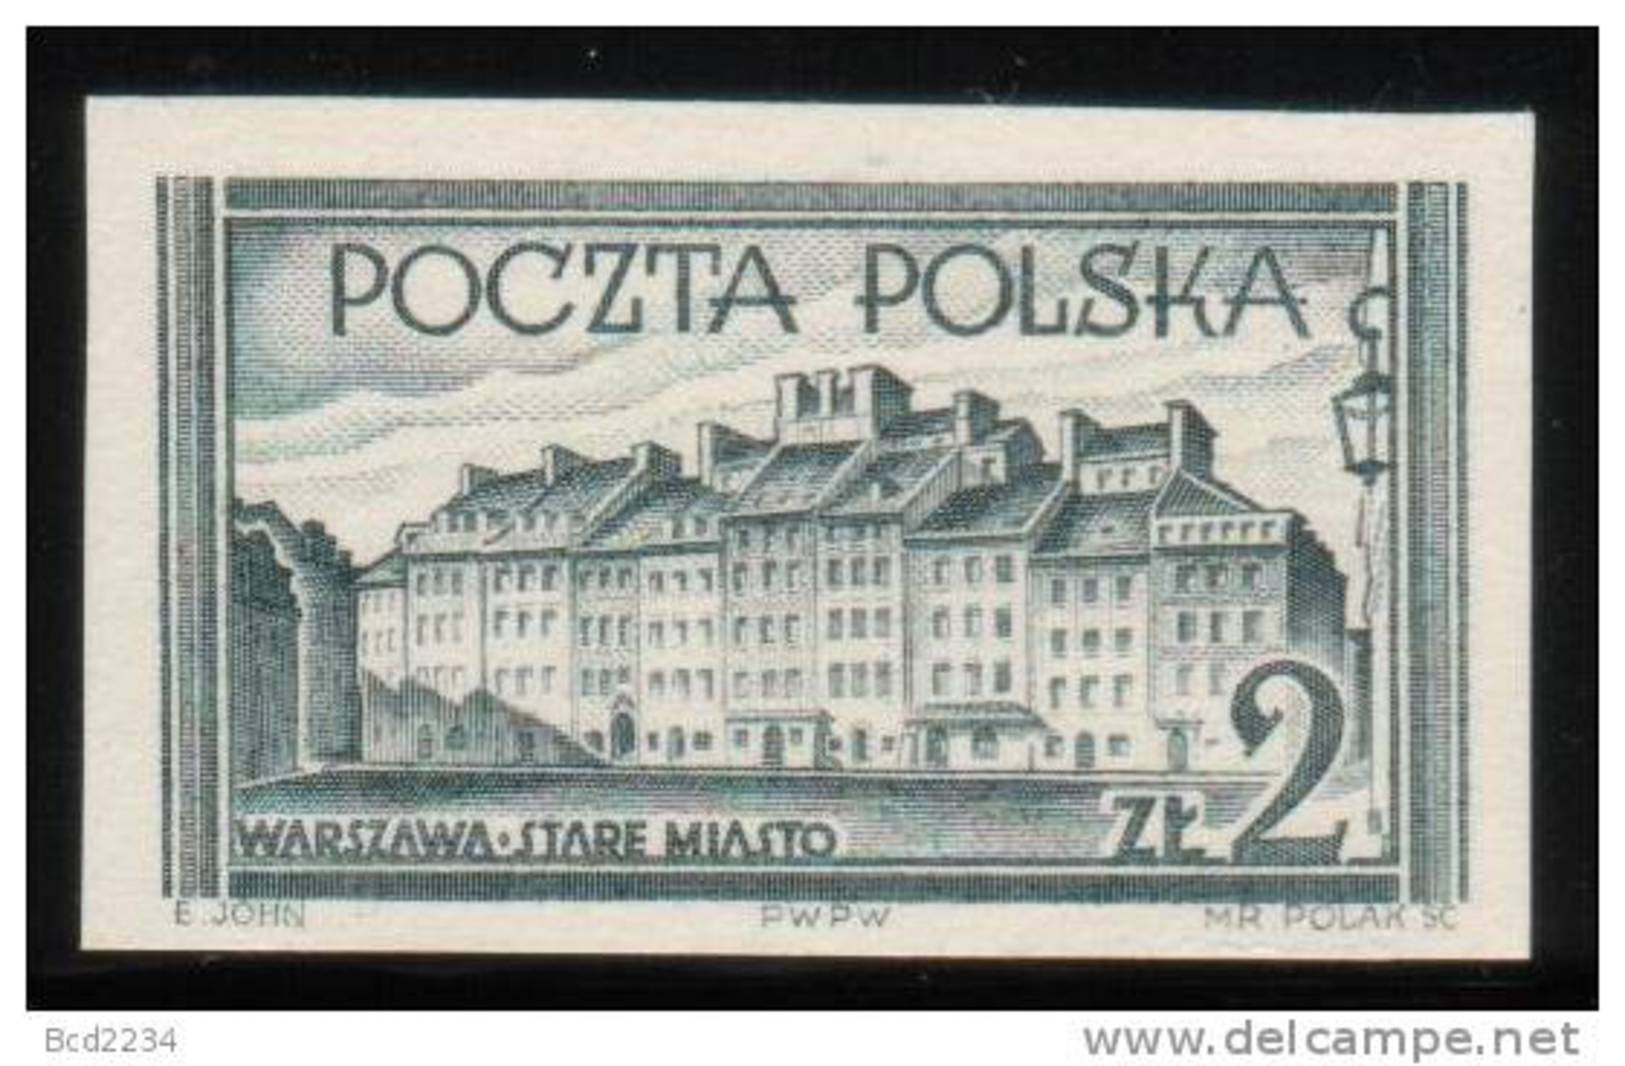 POLAND 1953 WARSAW HISTORICAL BUILDINGS IMPERF BLACK PROOF NHM (NO GUM) Architecture UNESCO World Heritage Site - Ensayos & Reimpresiones